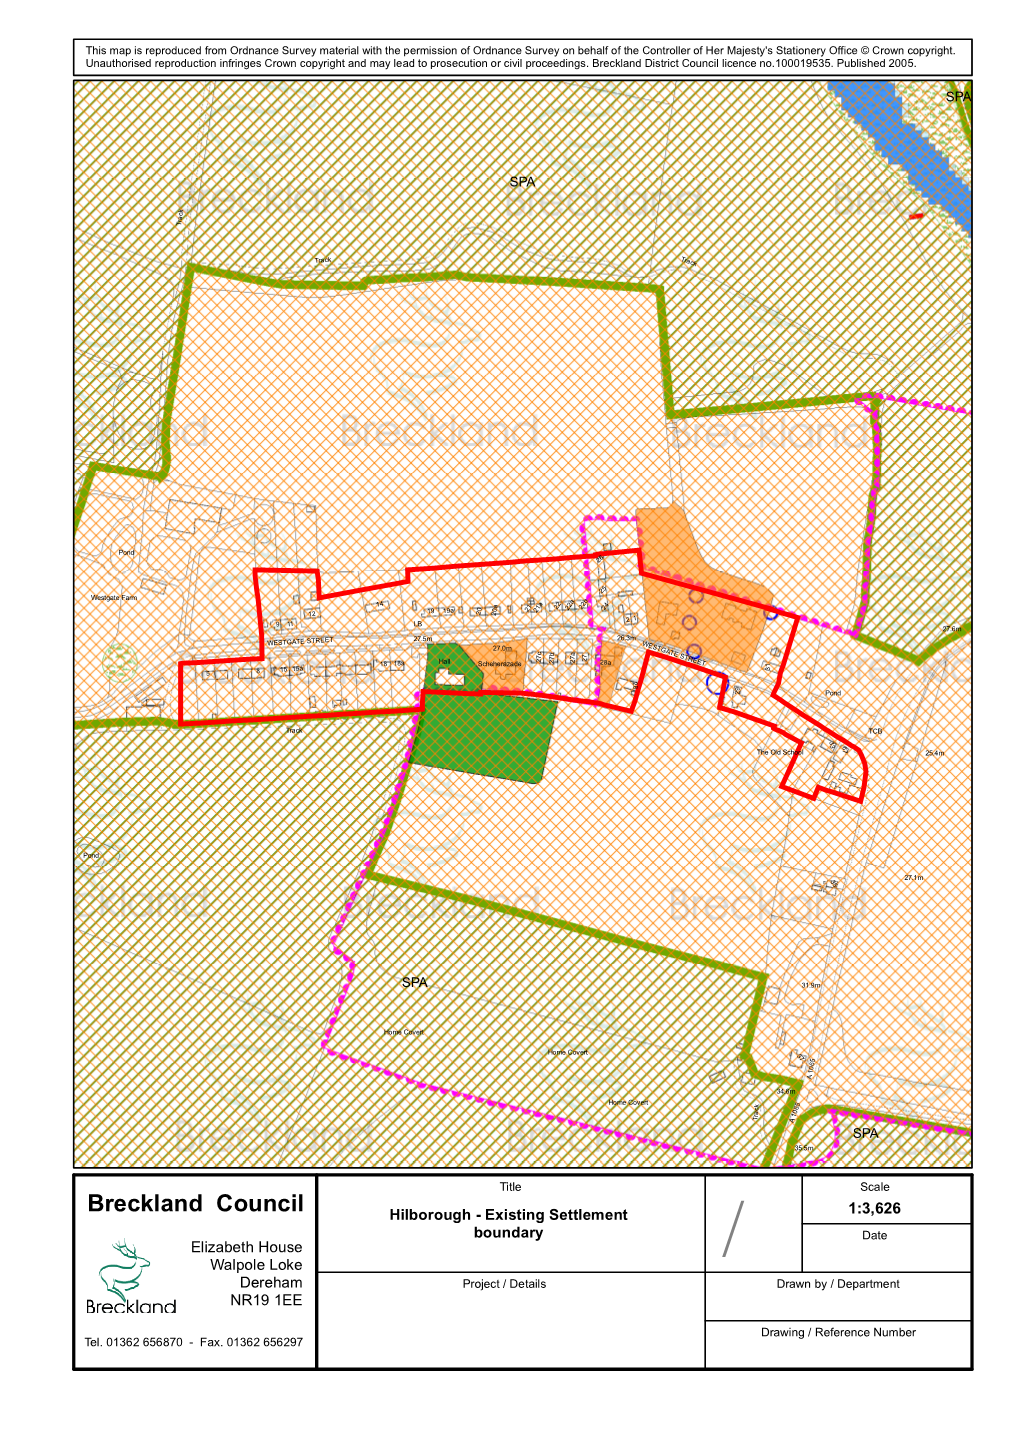 Breckland Council Hilborough - Existing Settlement 1:3,626 Boundary Date Elizabeth House / Walpole Loke Dereham Project / Details Drawn by / Department NR19 1EE